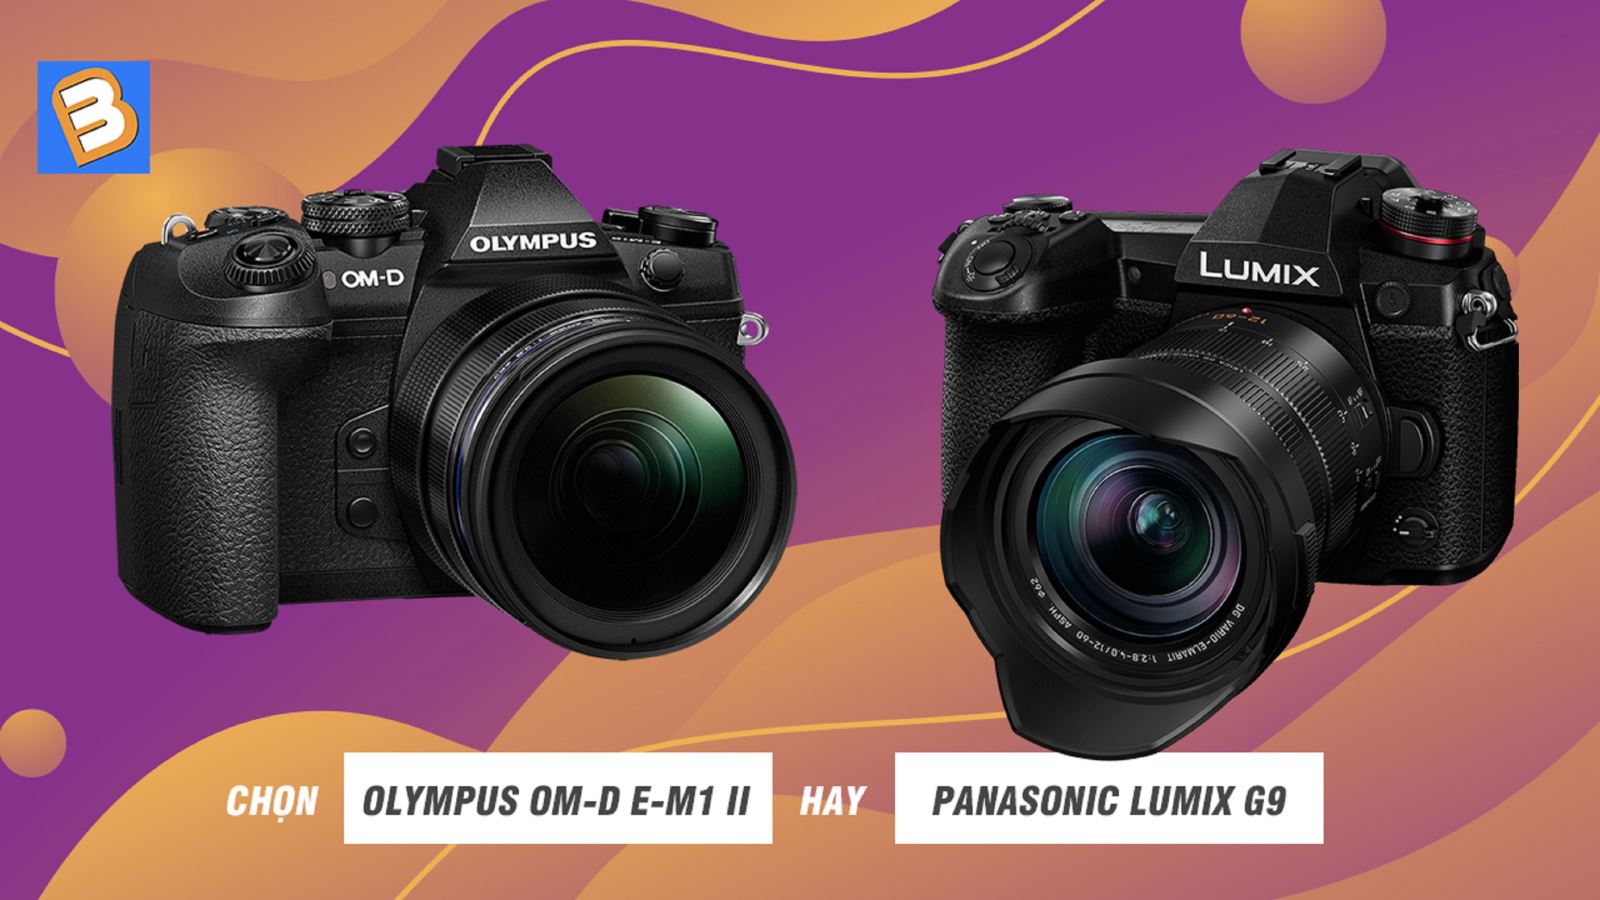 Chọn Olympus OM-D E-M1 II hay Panasonic Lumix G9